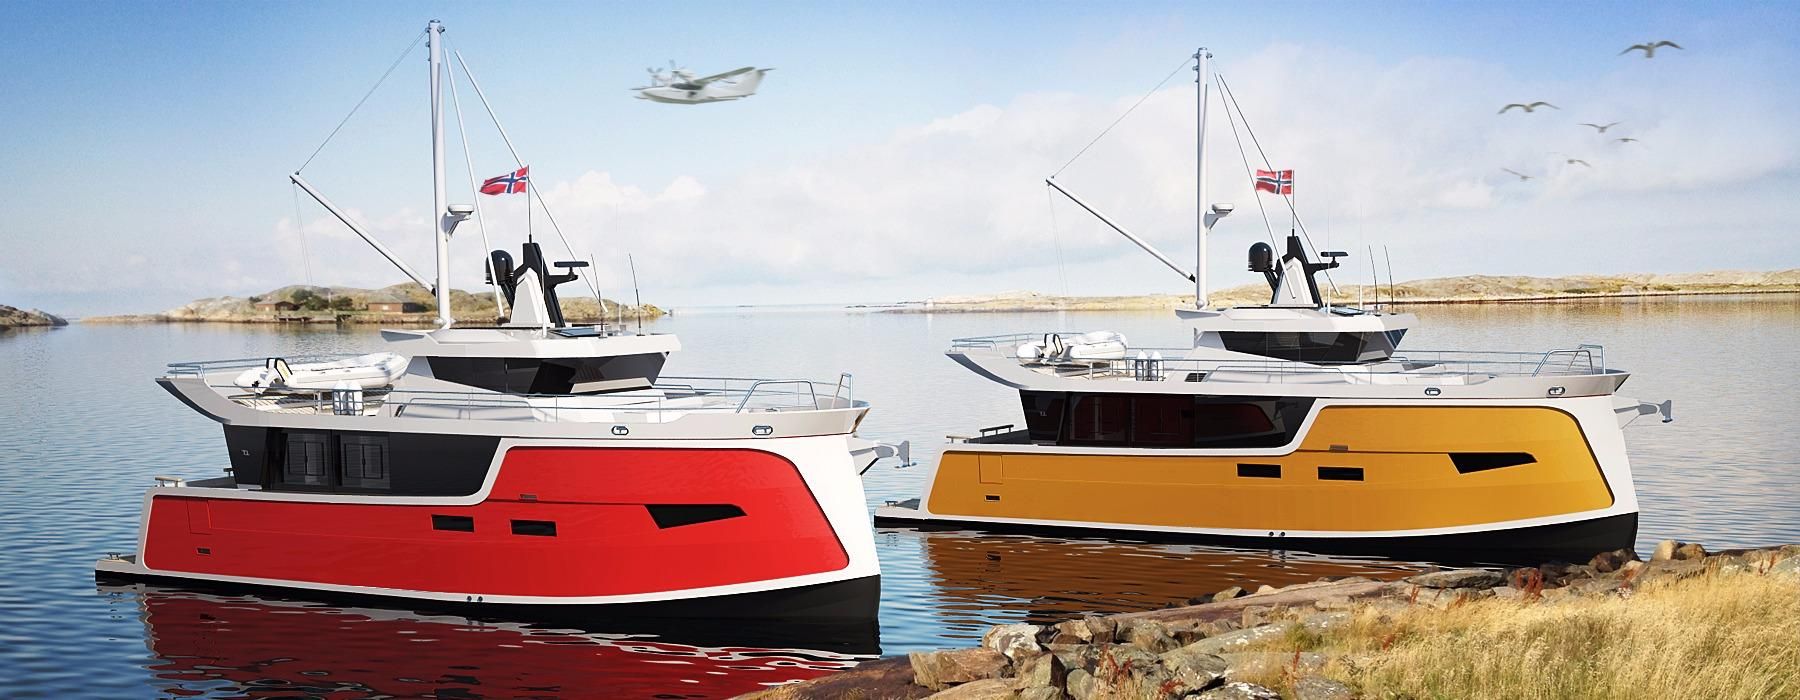 2018 Trondheim Trawler Power Boat For Sale - www 